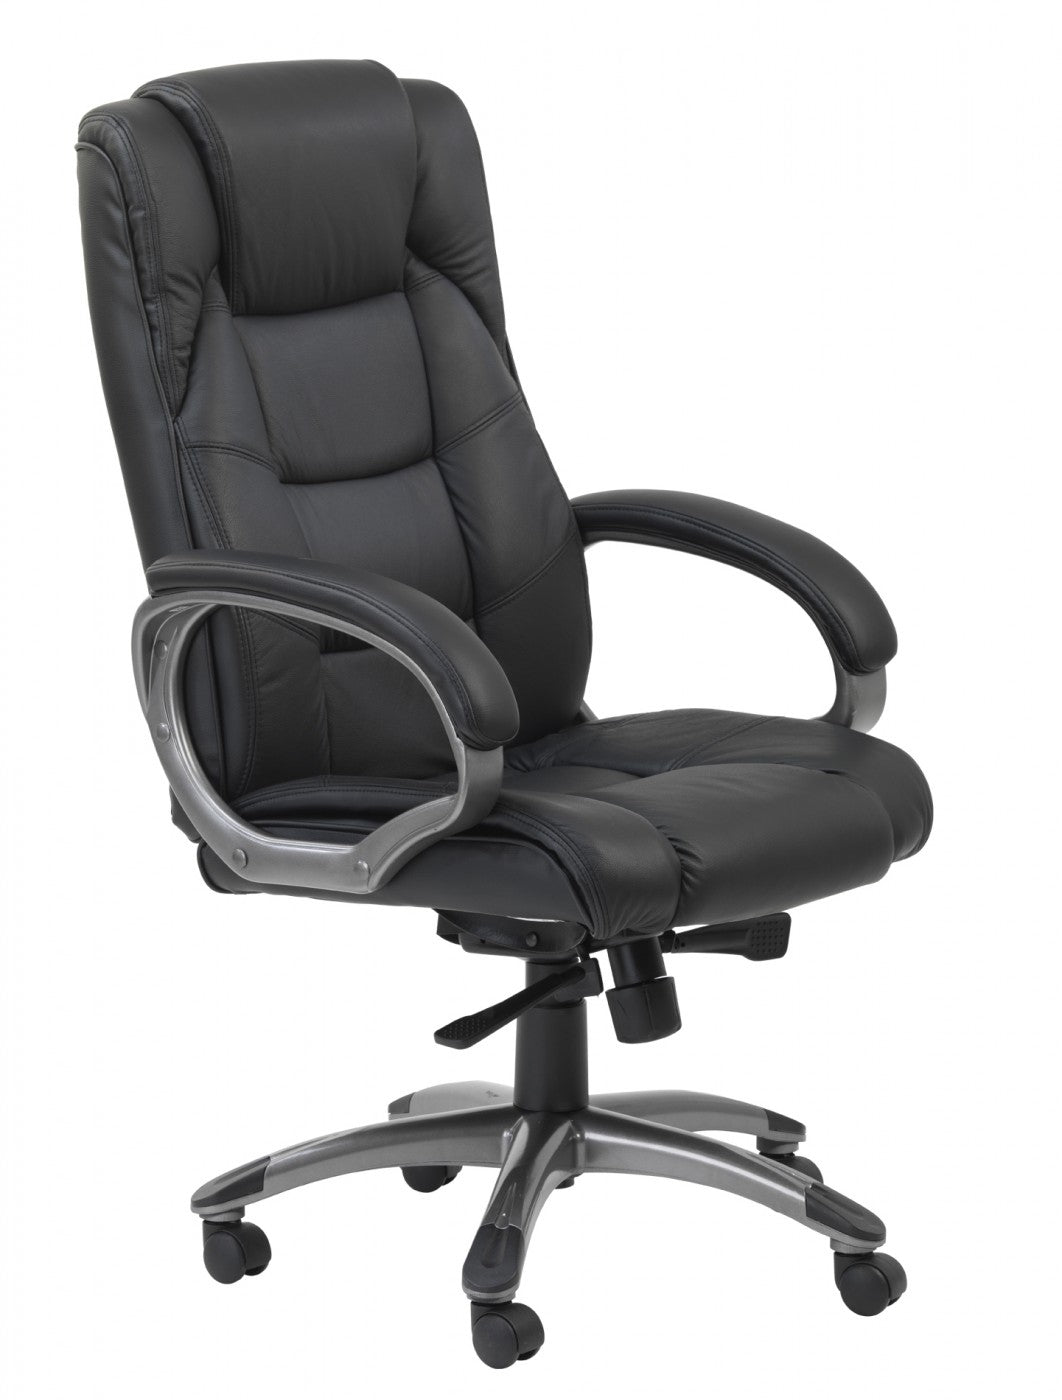 Northland Black High Back Leather Chair - AOC6332-L-BK Huddersfield